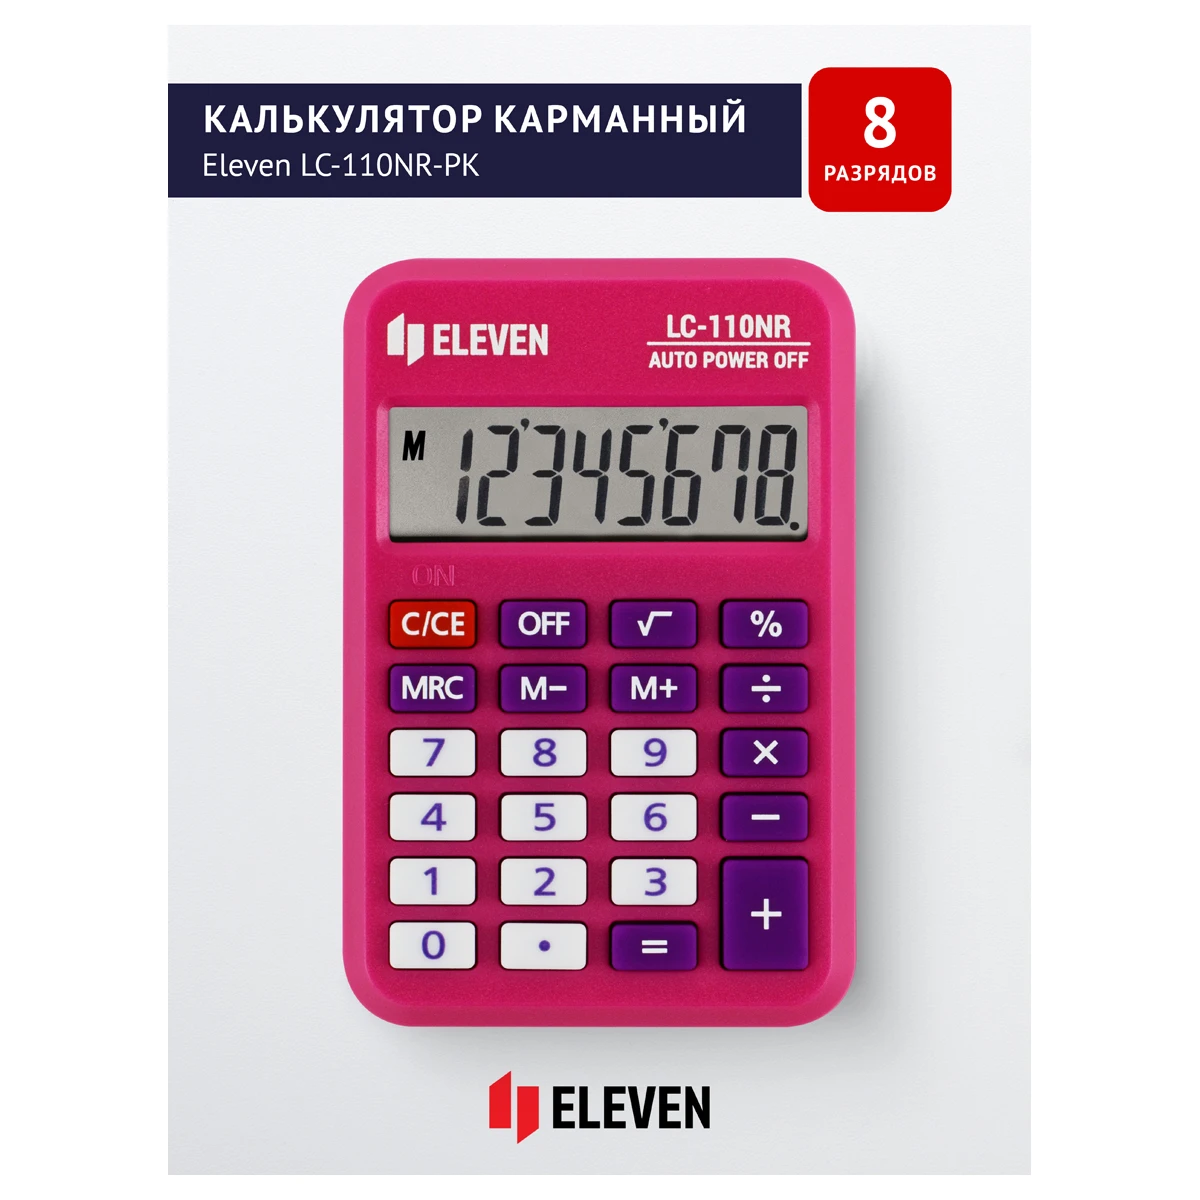 Калькулятор карманный Eleven LC-110NR-PK, 8 разрядов, питание от батарейки,